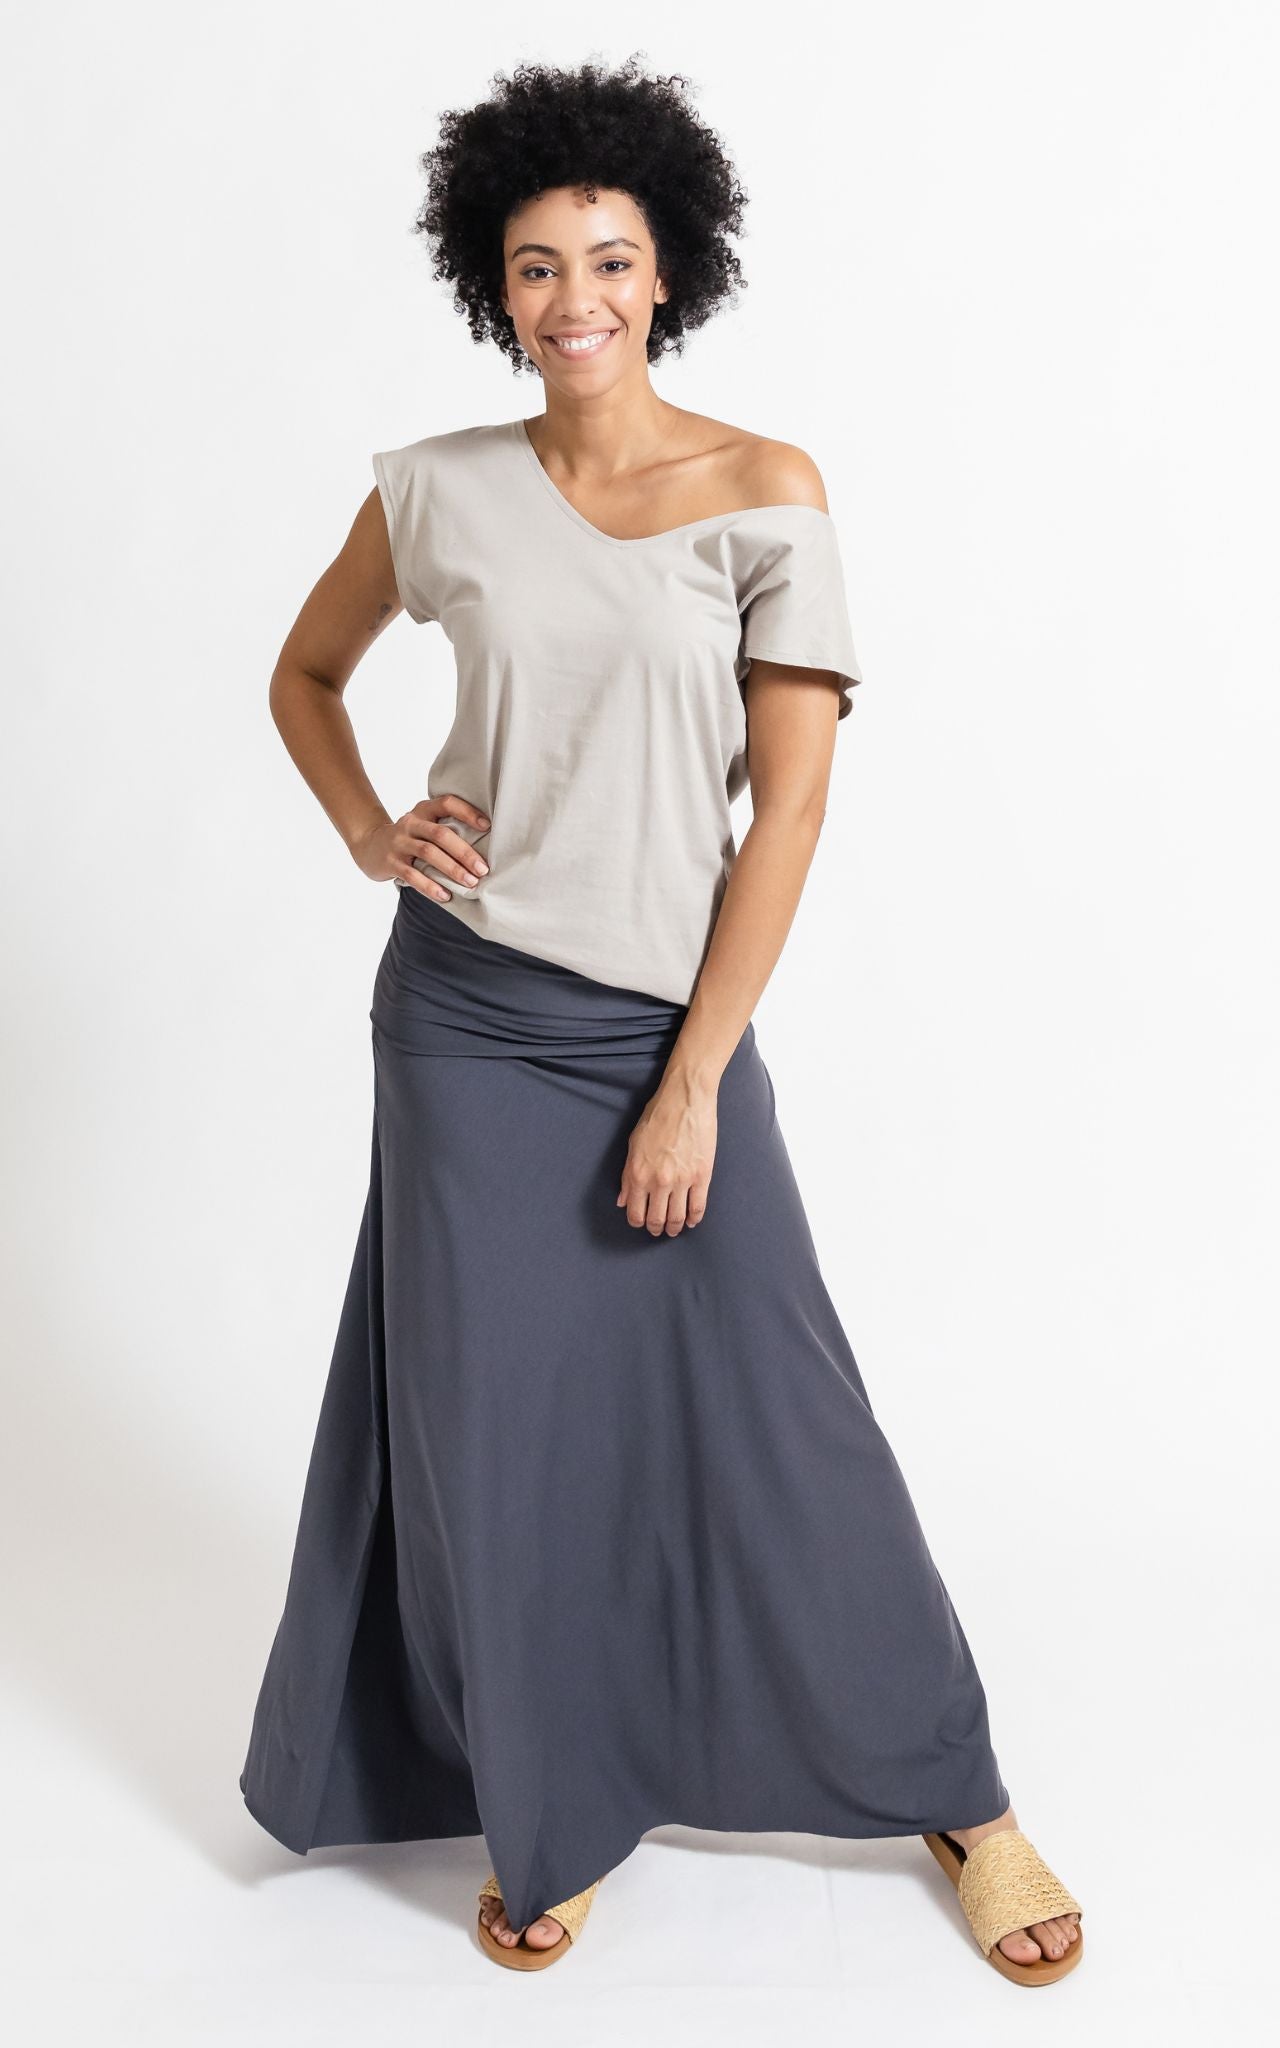 Surya Australia Ethical Organic Cotton Skirt made in Nepal - Dusty Grey